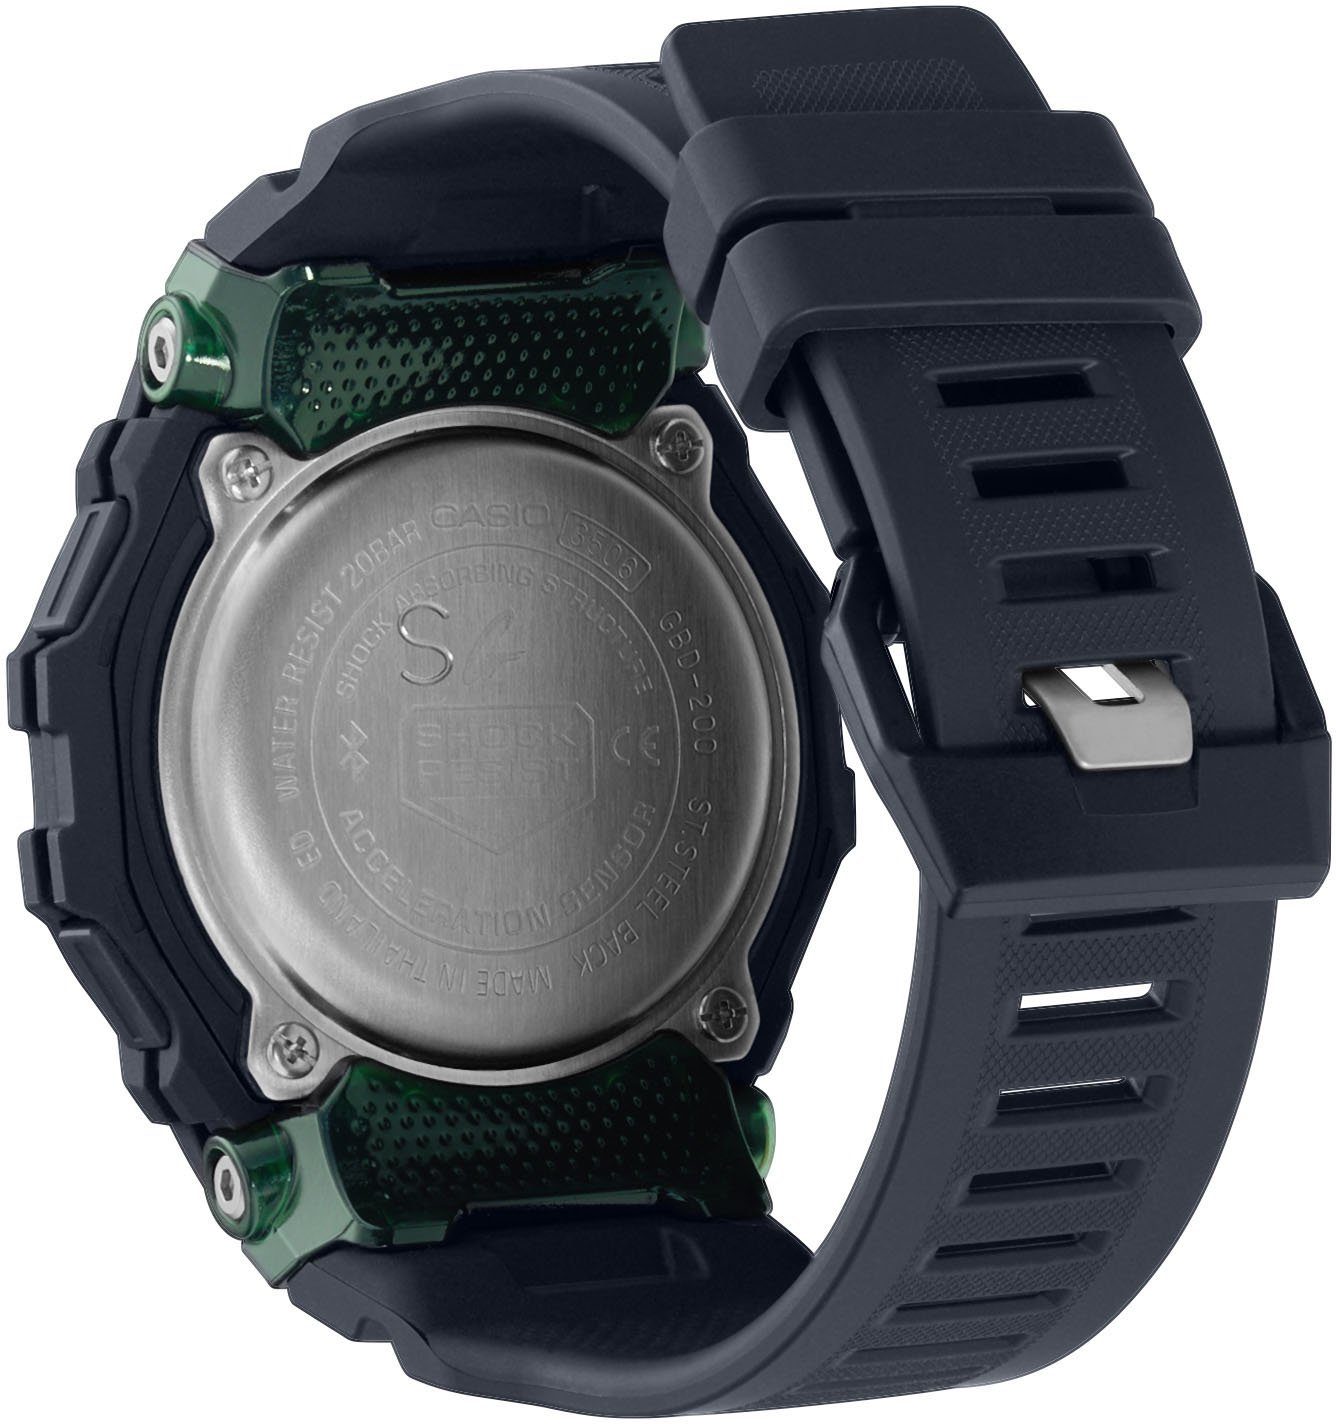 CASIO G-SHOCK GBD-200UU-1ER Smartwatch